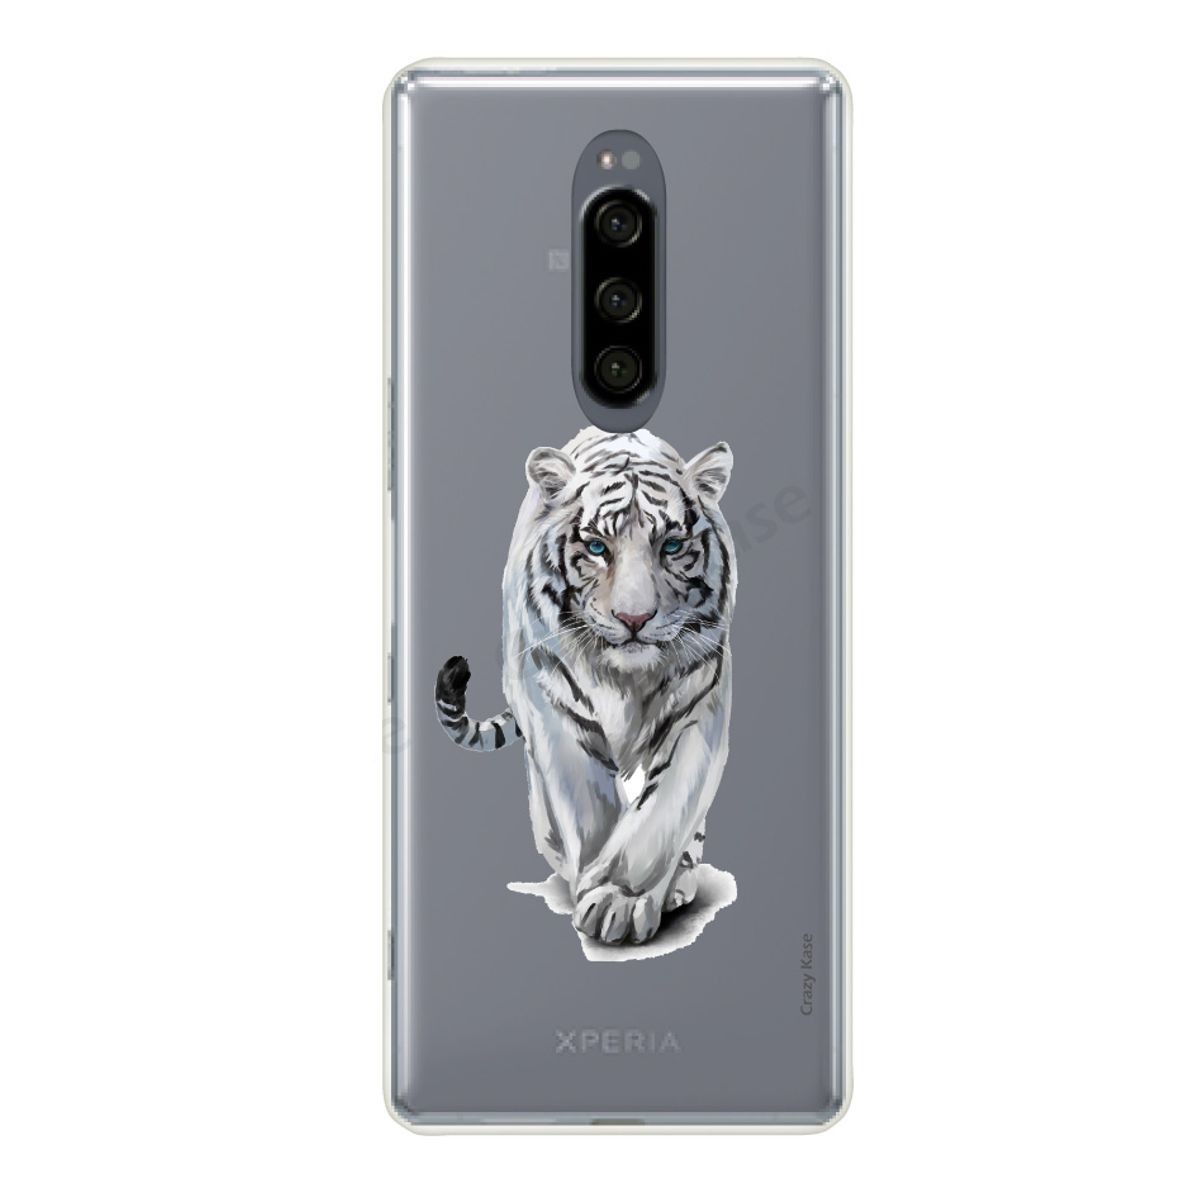 Coque compatible Xperia 1 souple Tigre blanc - Crazy Kase